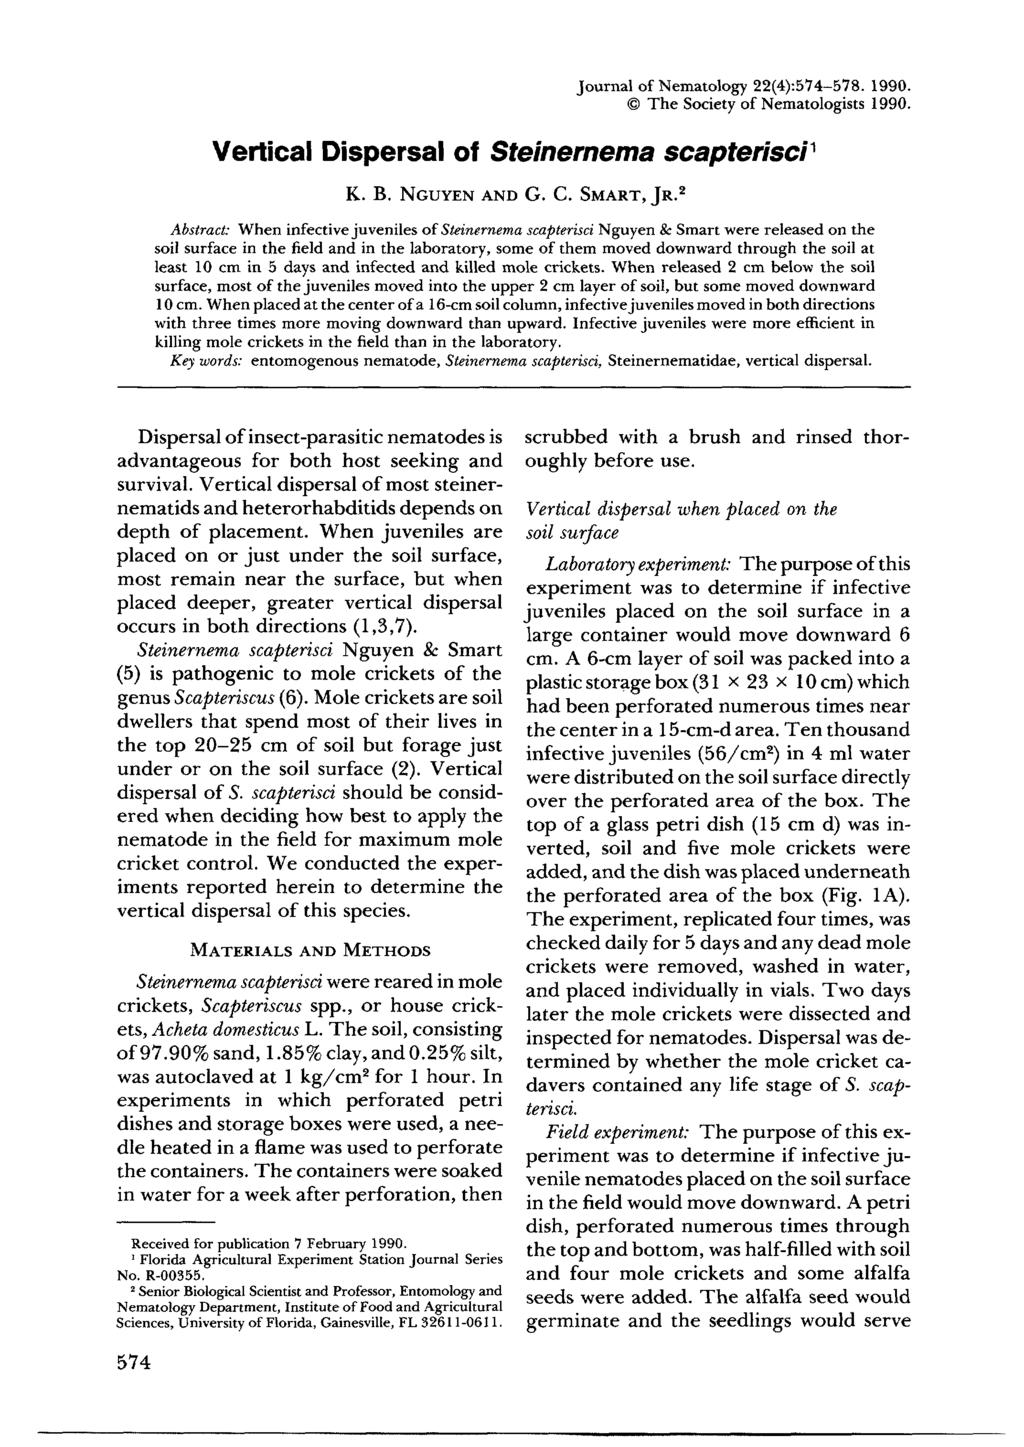 Journal of Nematology 22(4):574-578. 1990. The Society of Nematologists 1990. Vertical Dispersal of Stemernema scapterisci 1 K. B. NGUYEN AND O. C.